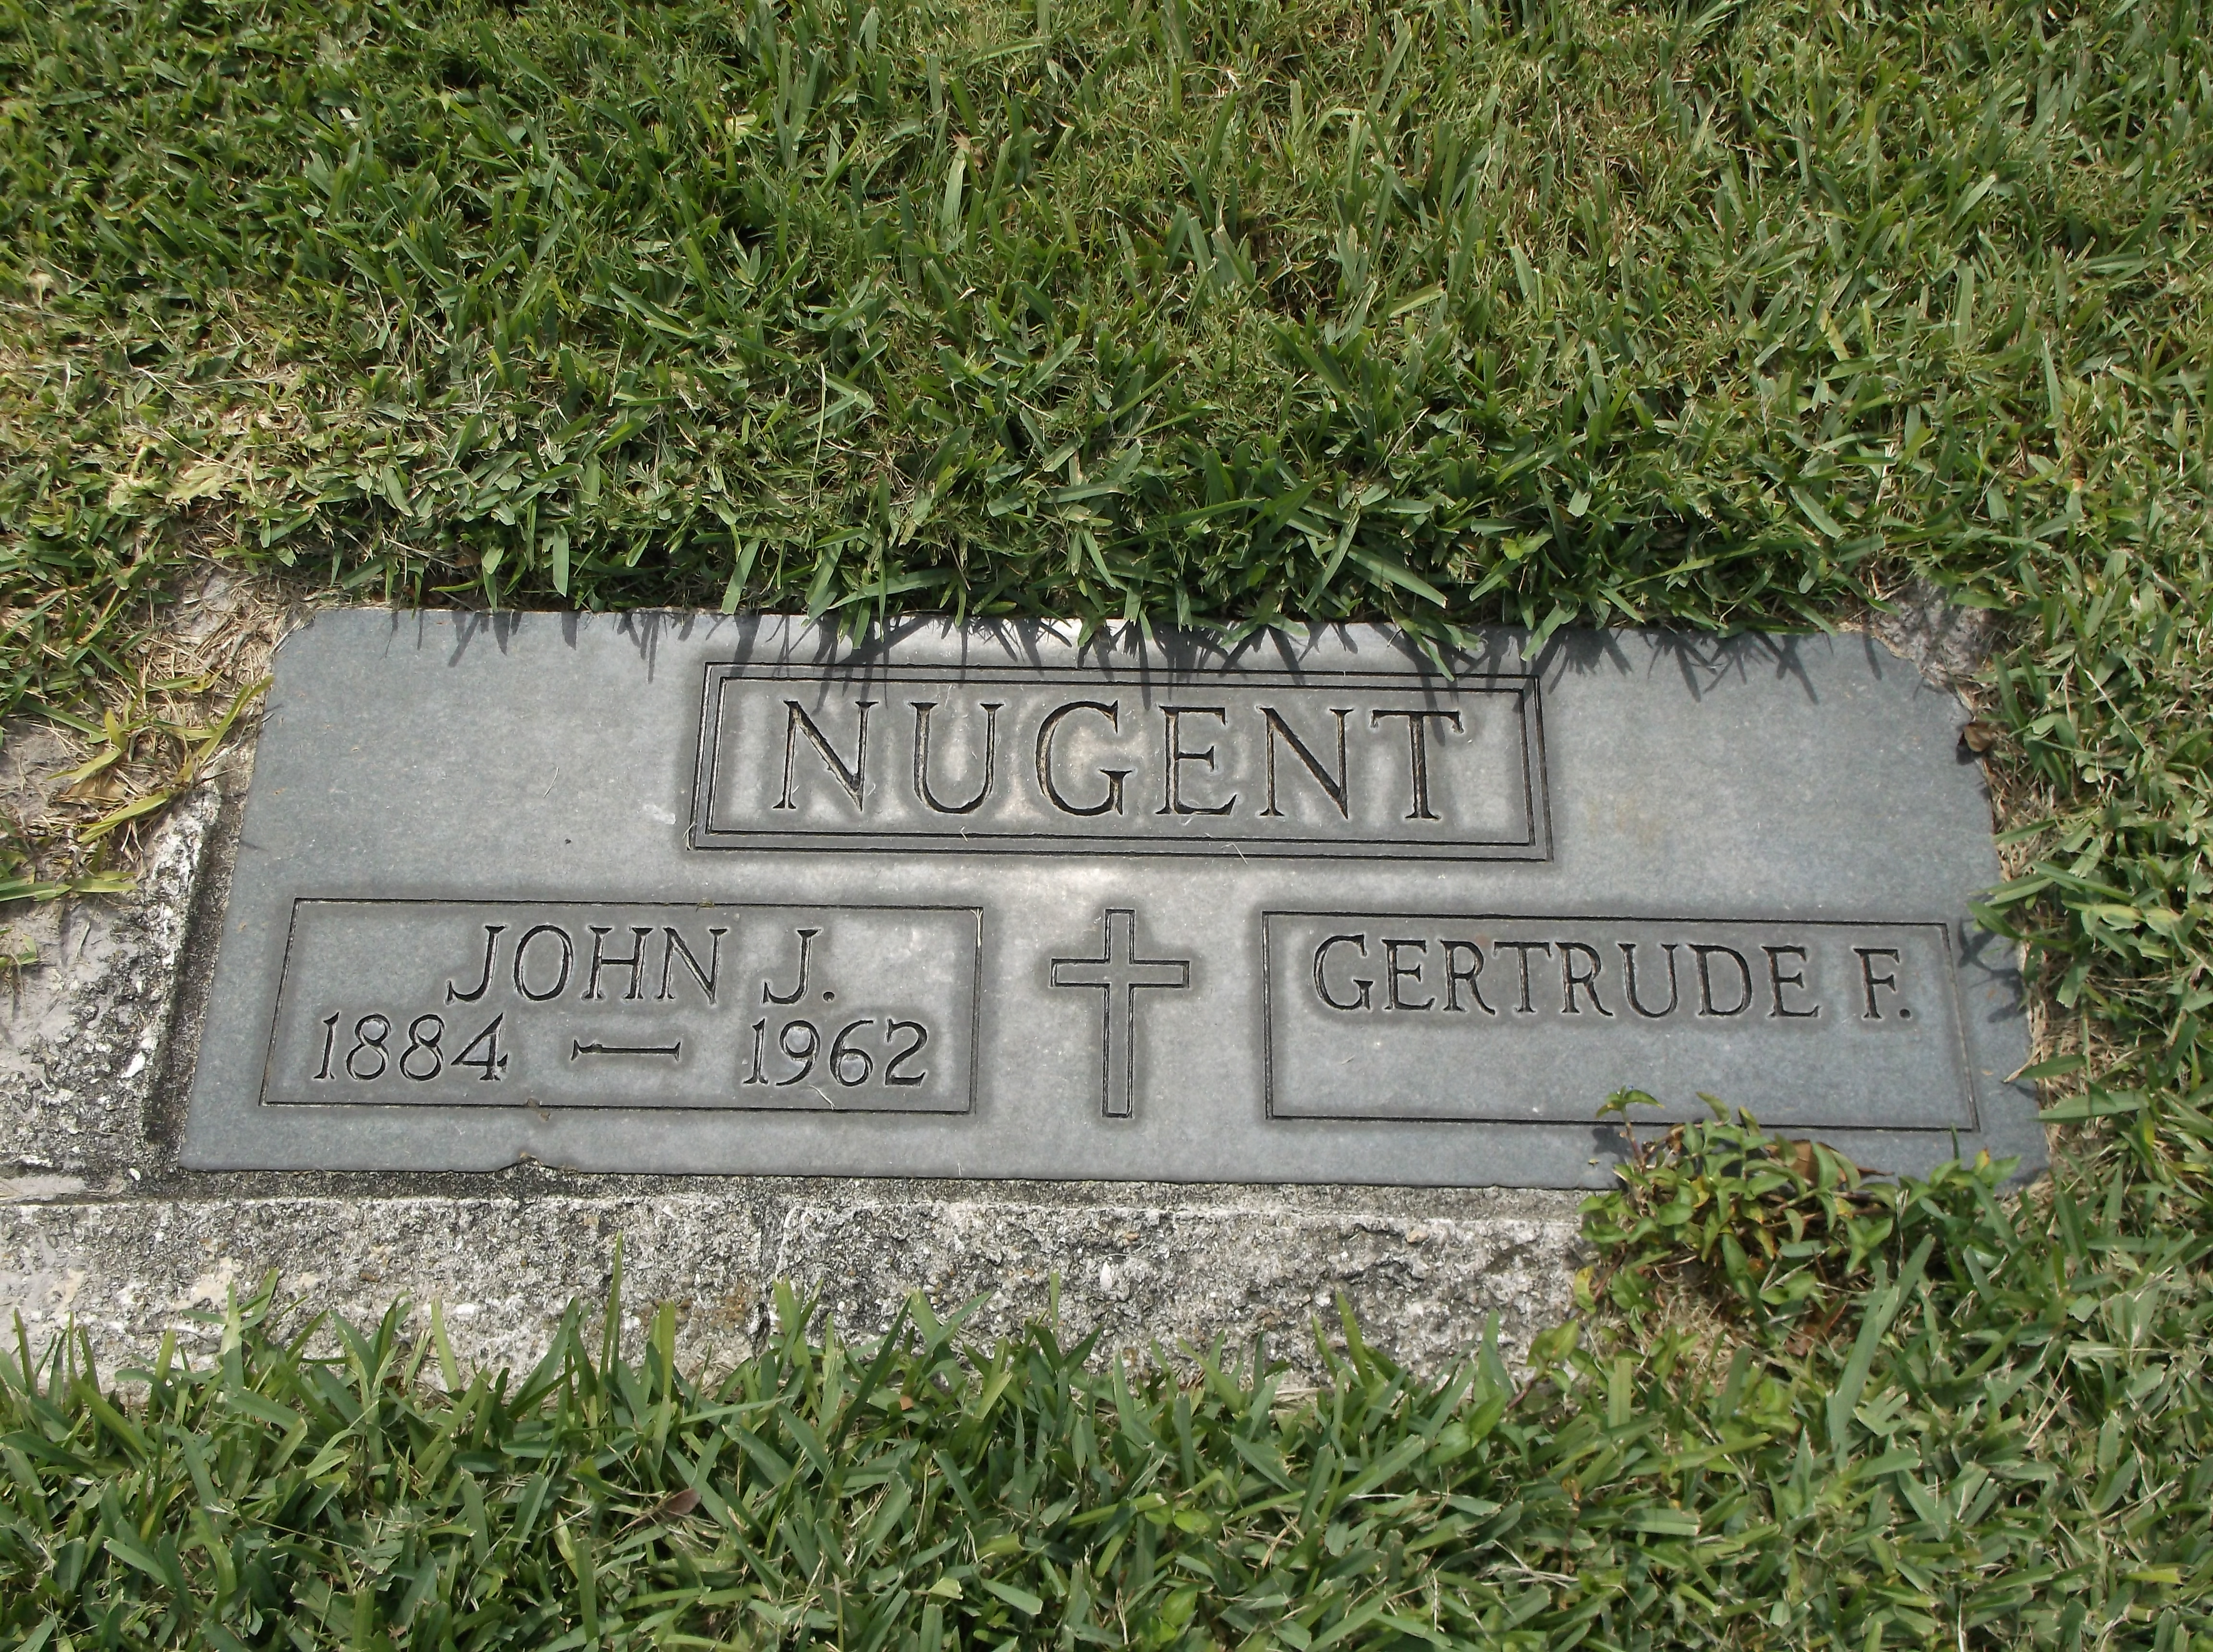 John J Nugent